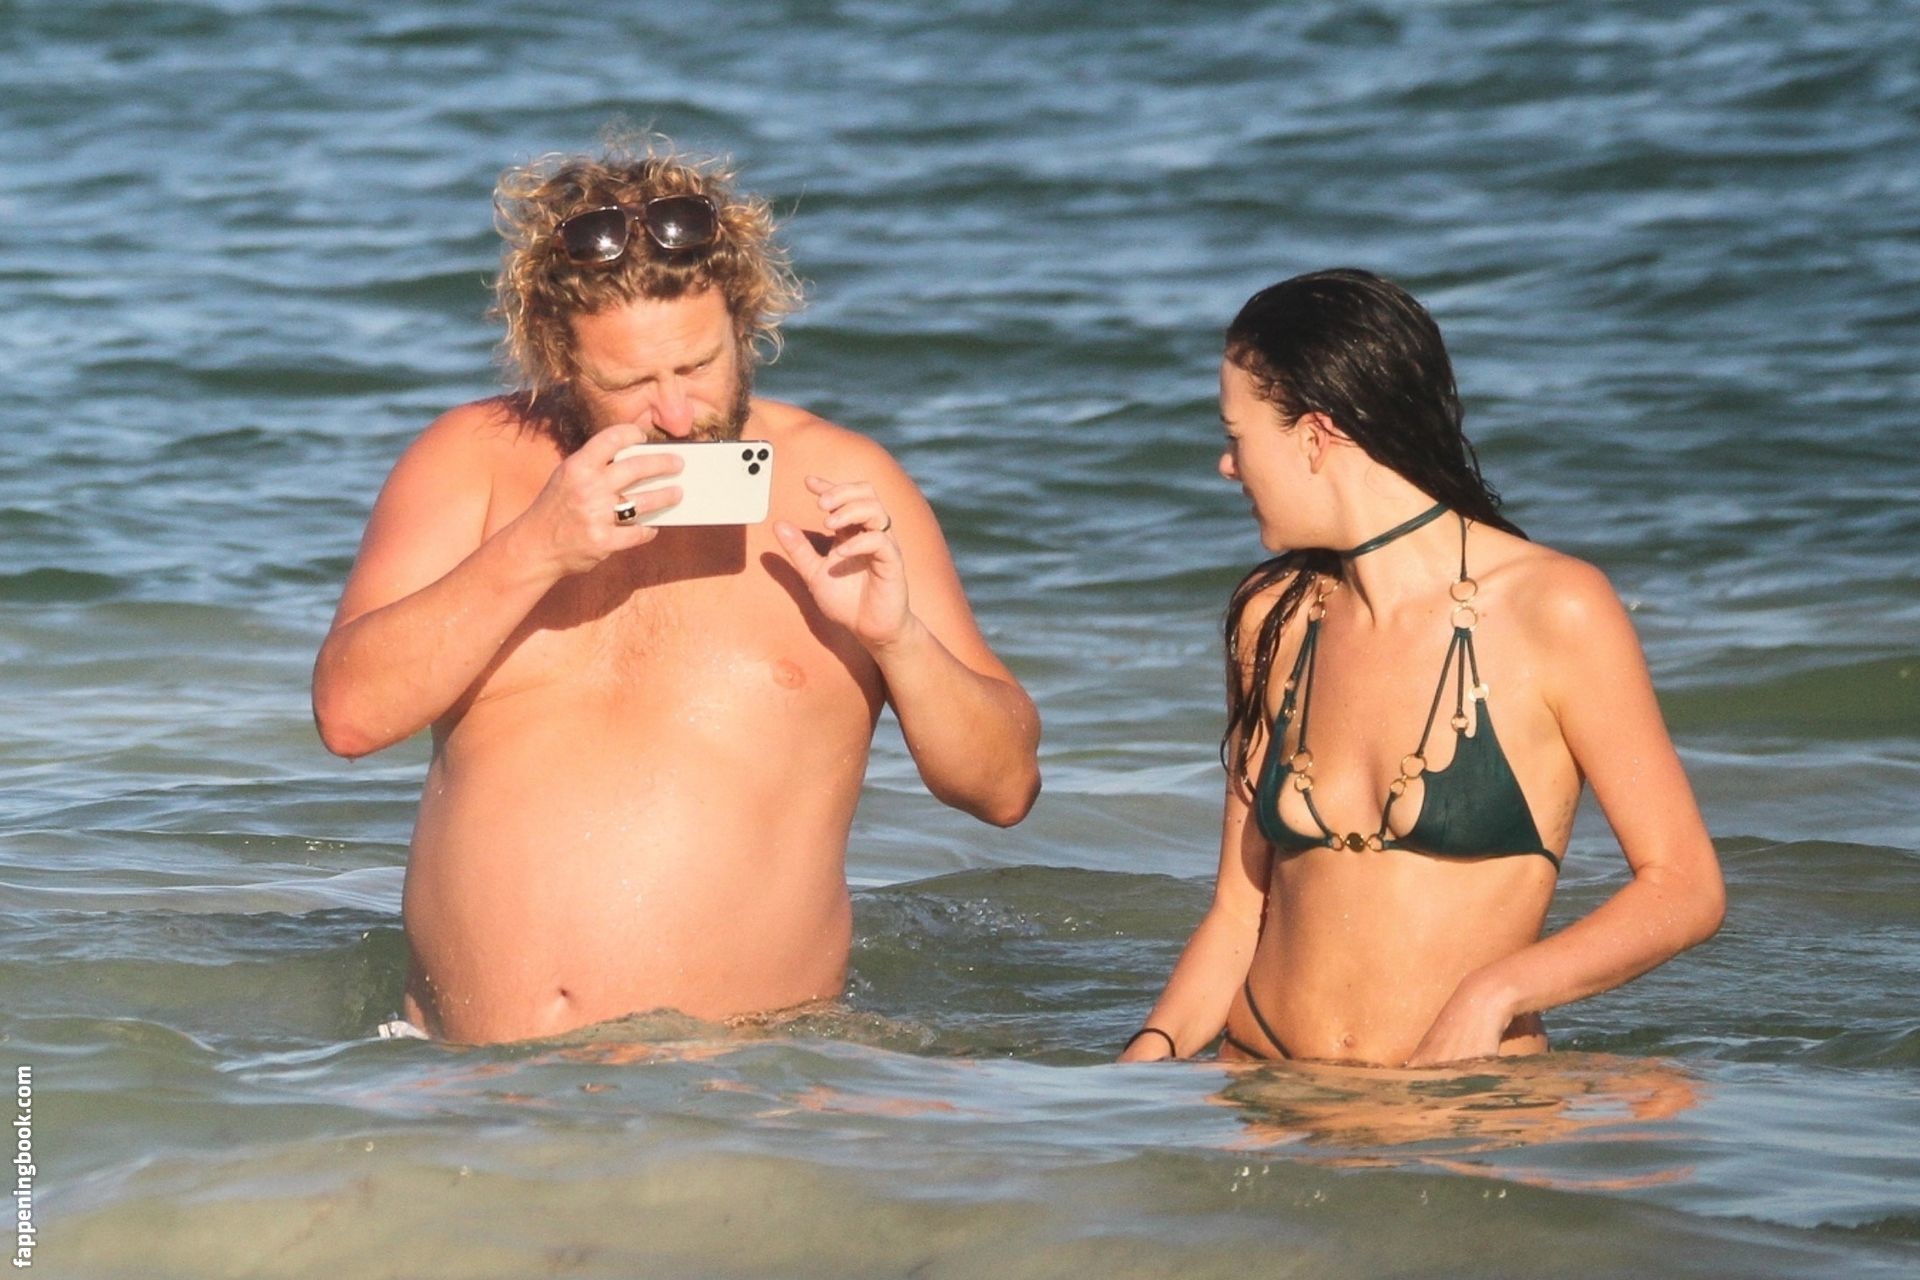 Leaked eliza cummings nipple slip and wet bikini photos